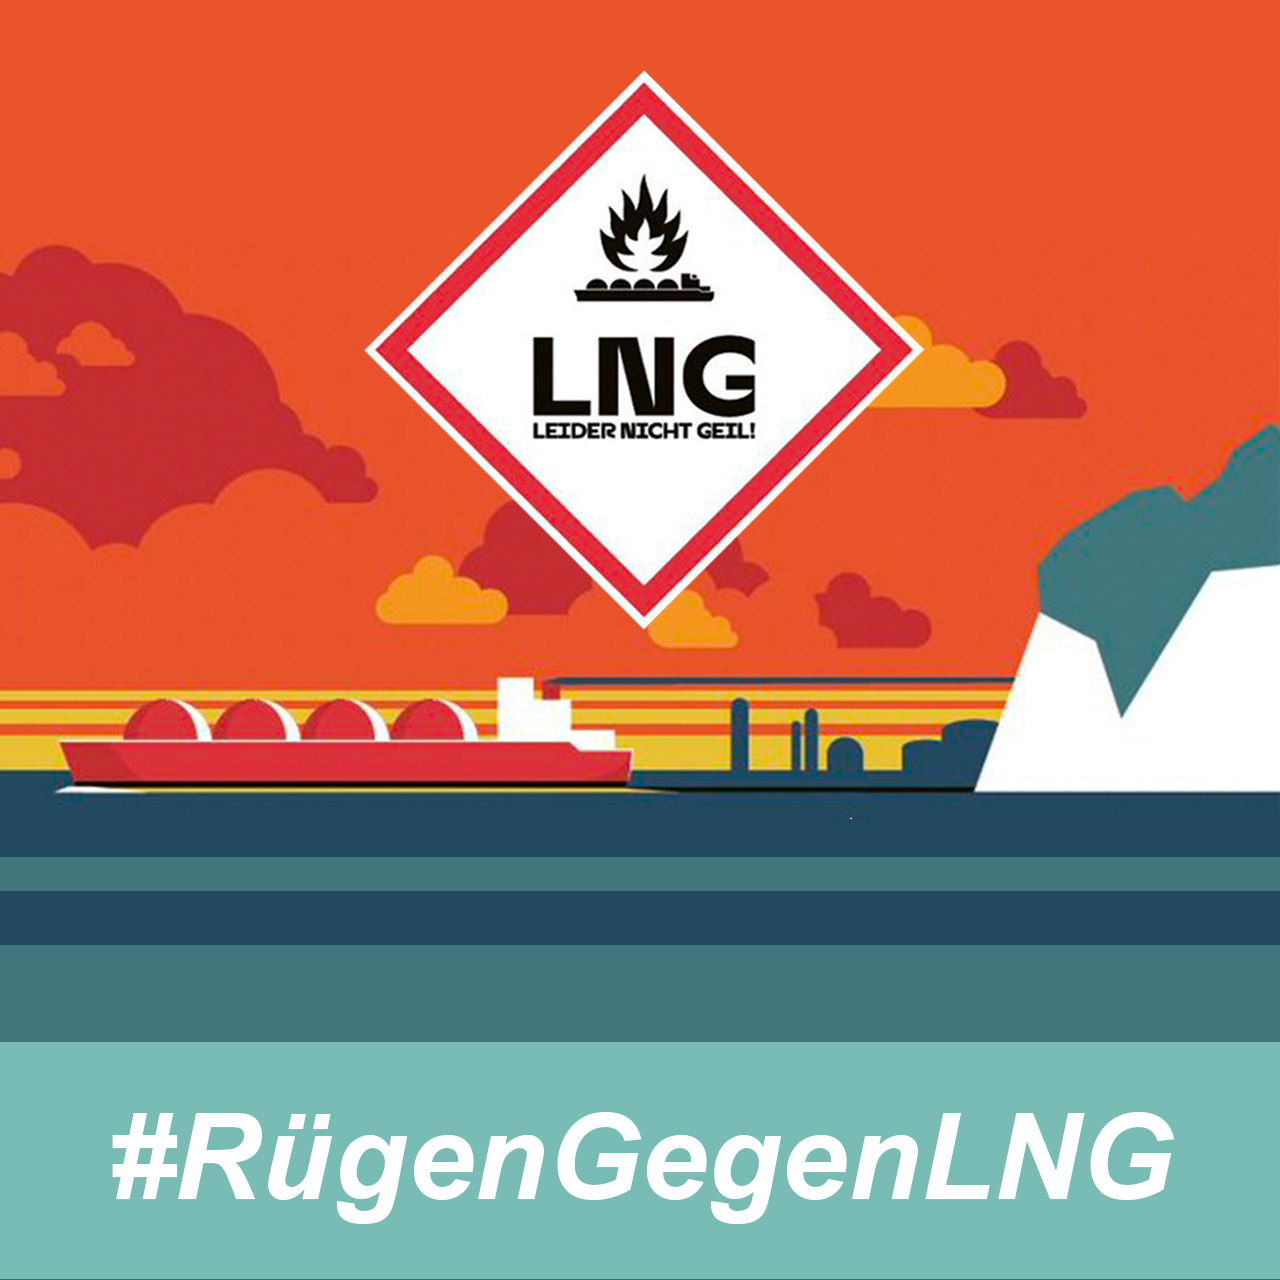 Petitions-Keyvisual: Kein LNG vor Rügen!